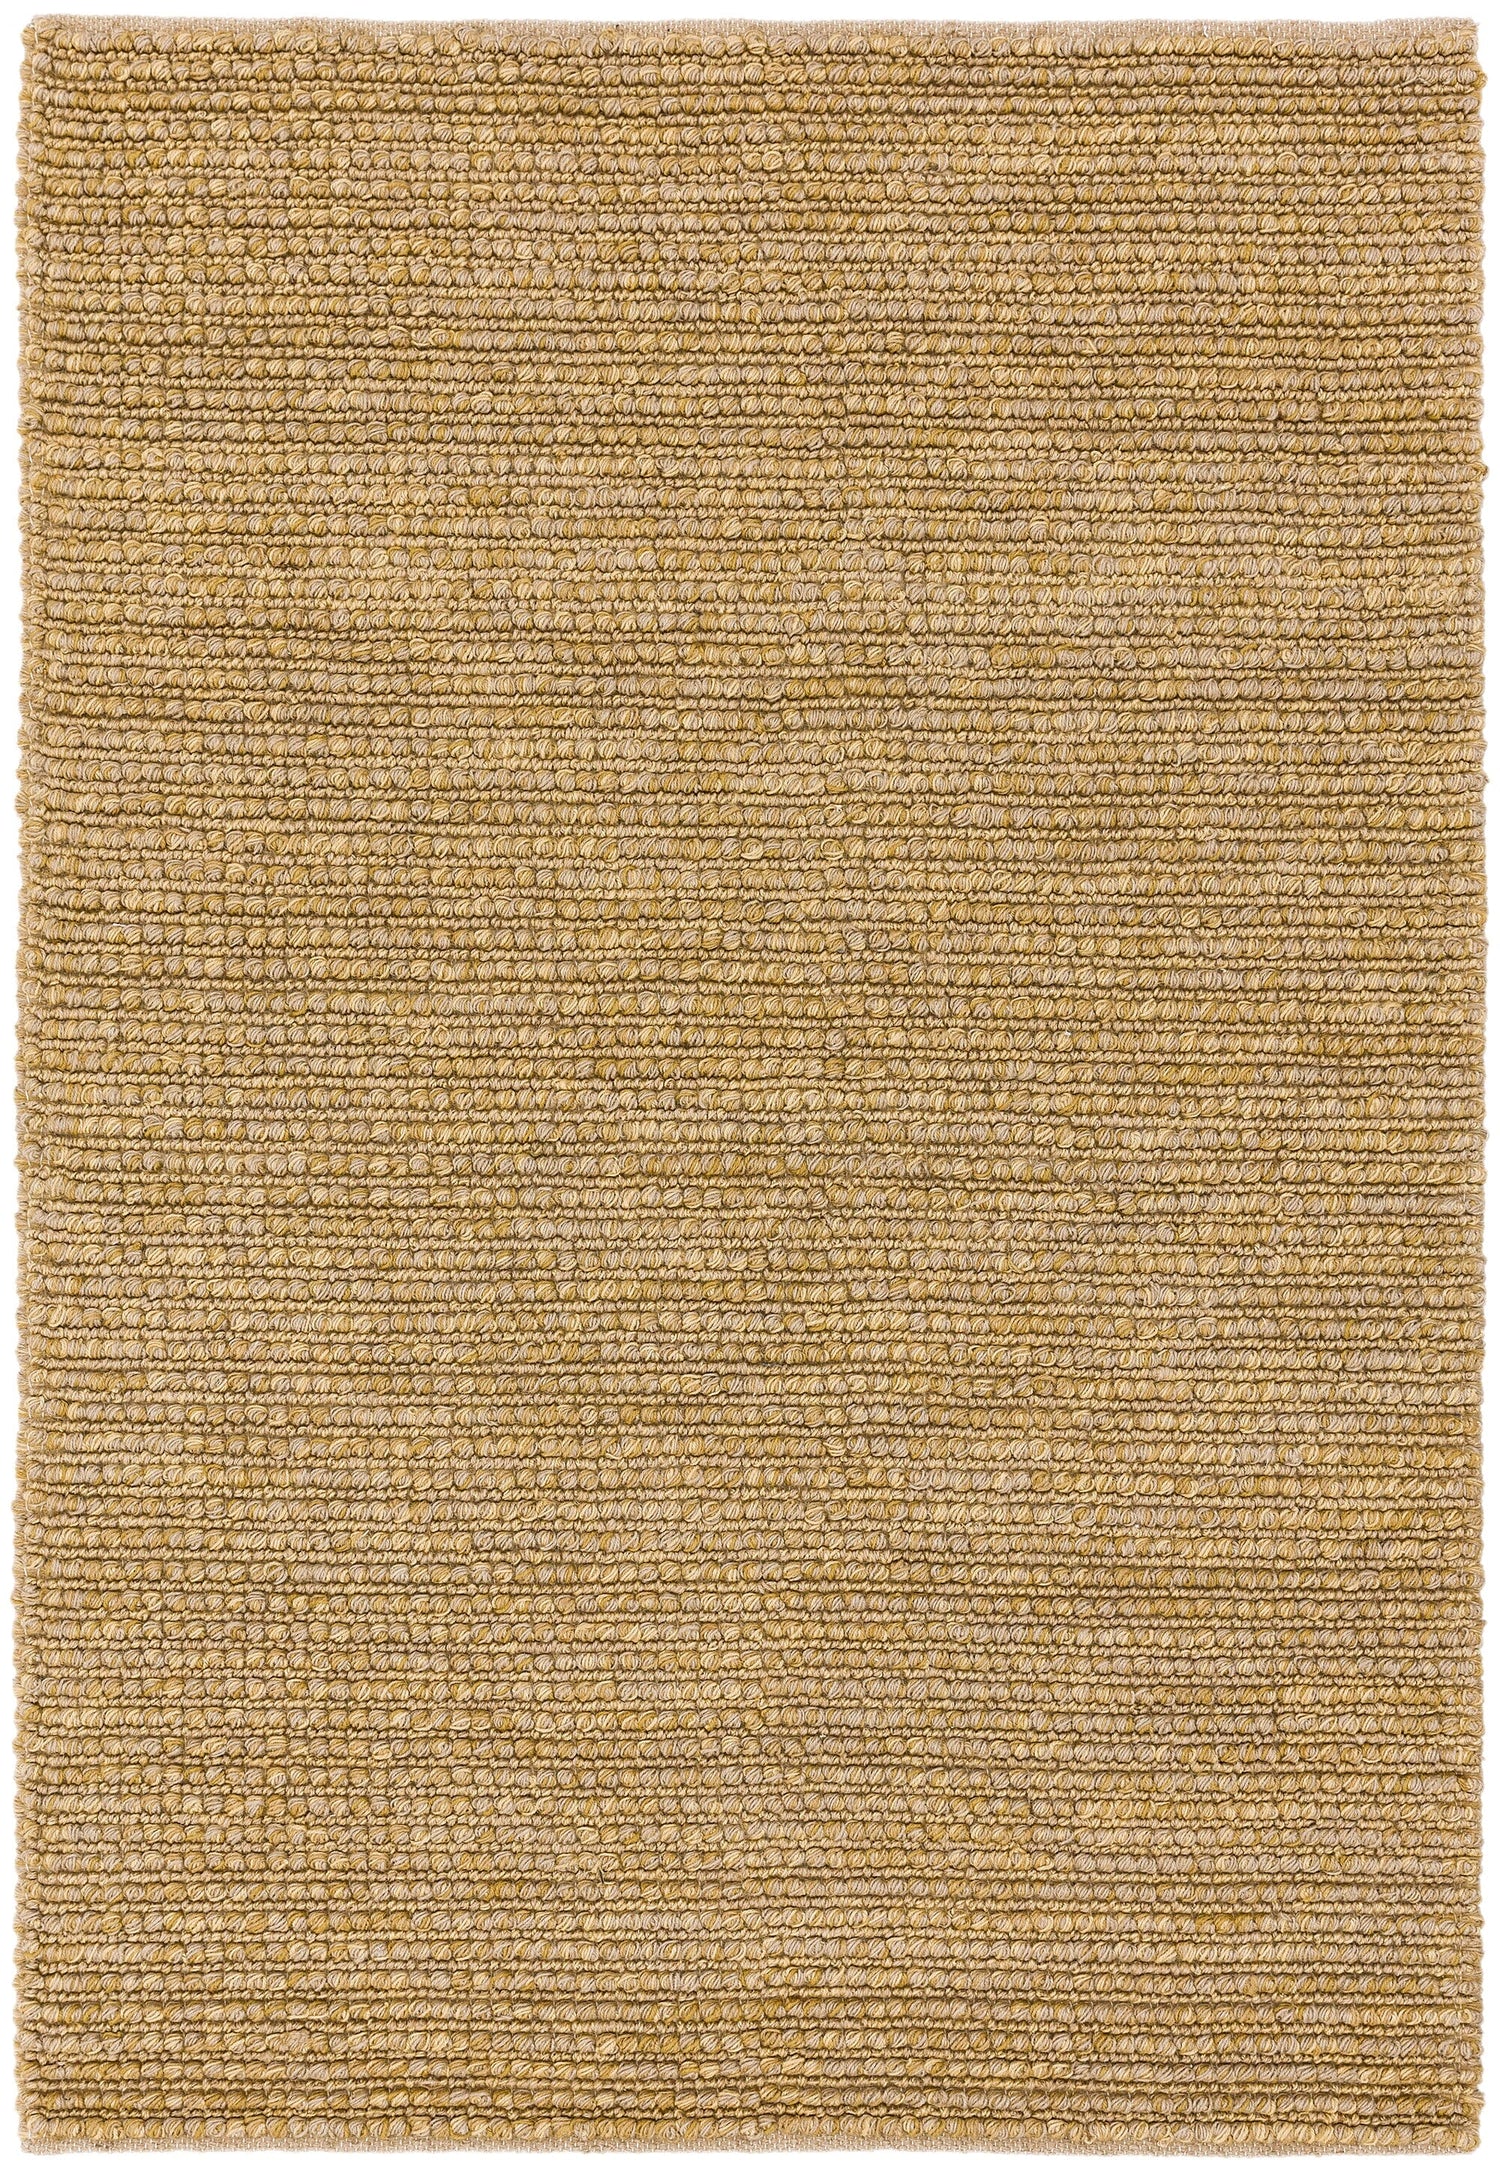  Asiatic Carpets-Asiatic Carpets Jute Loop Hand Woven Rug Natural - 120 x 180cm-Beige, Natural 173 